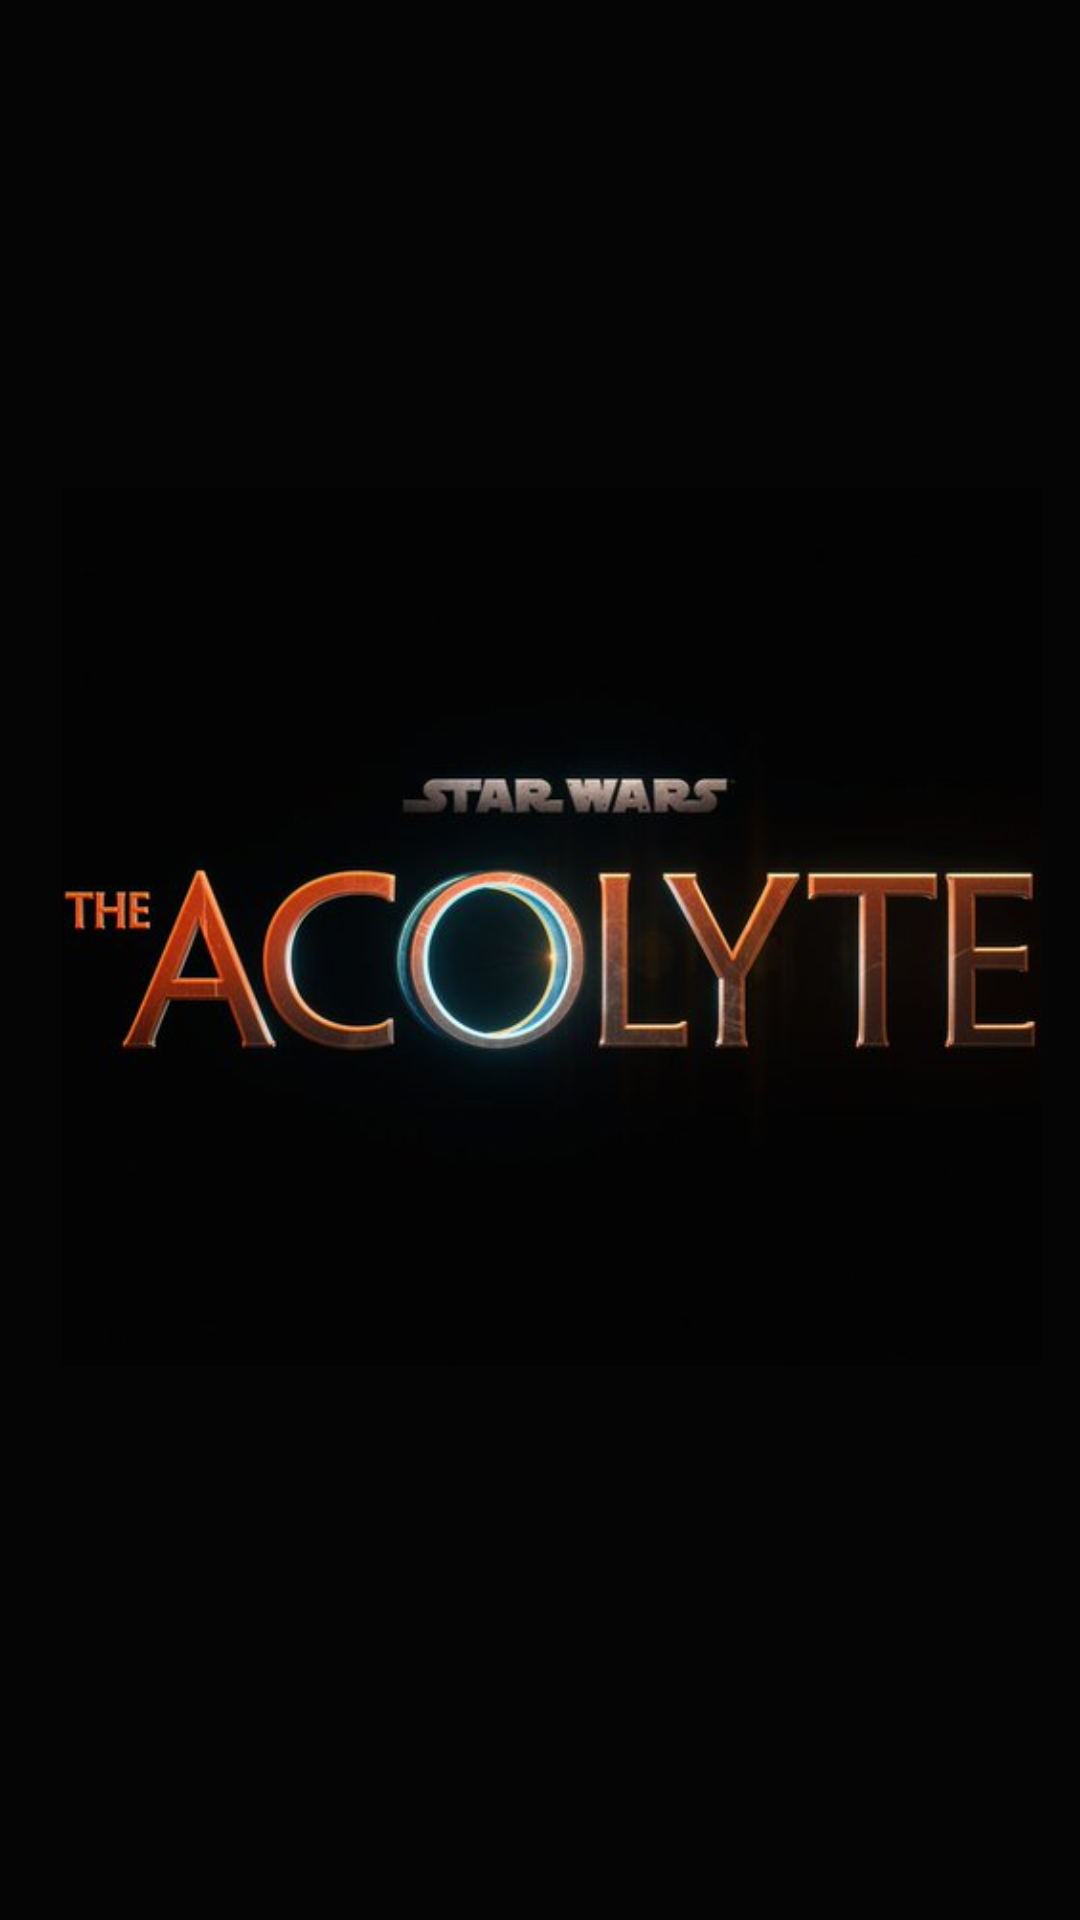 The Acolyte logo